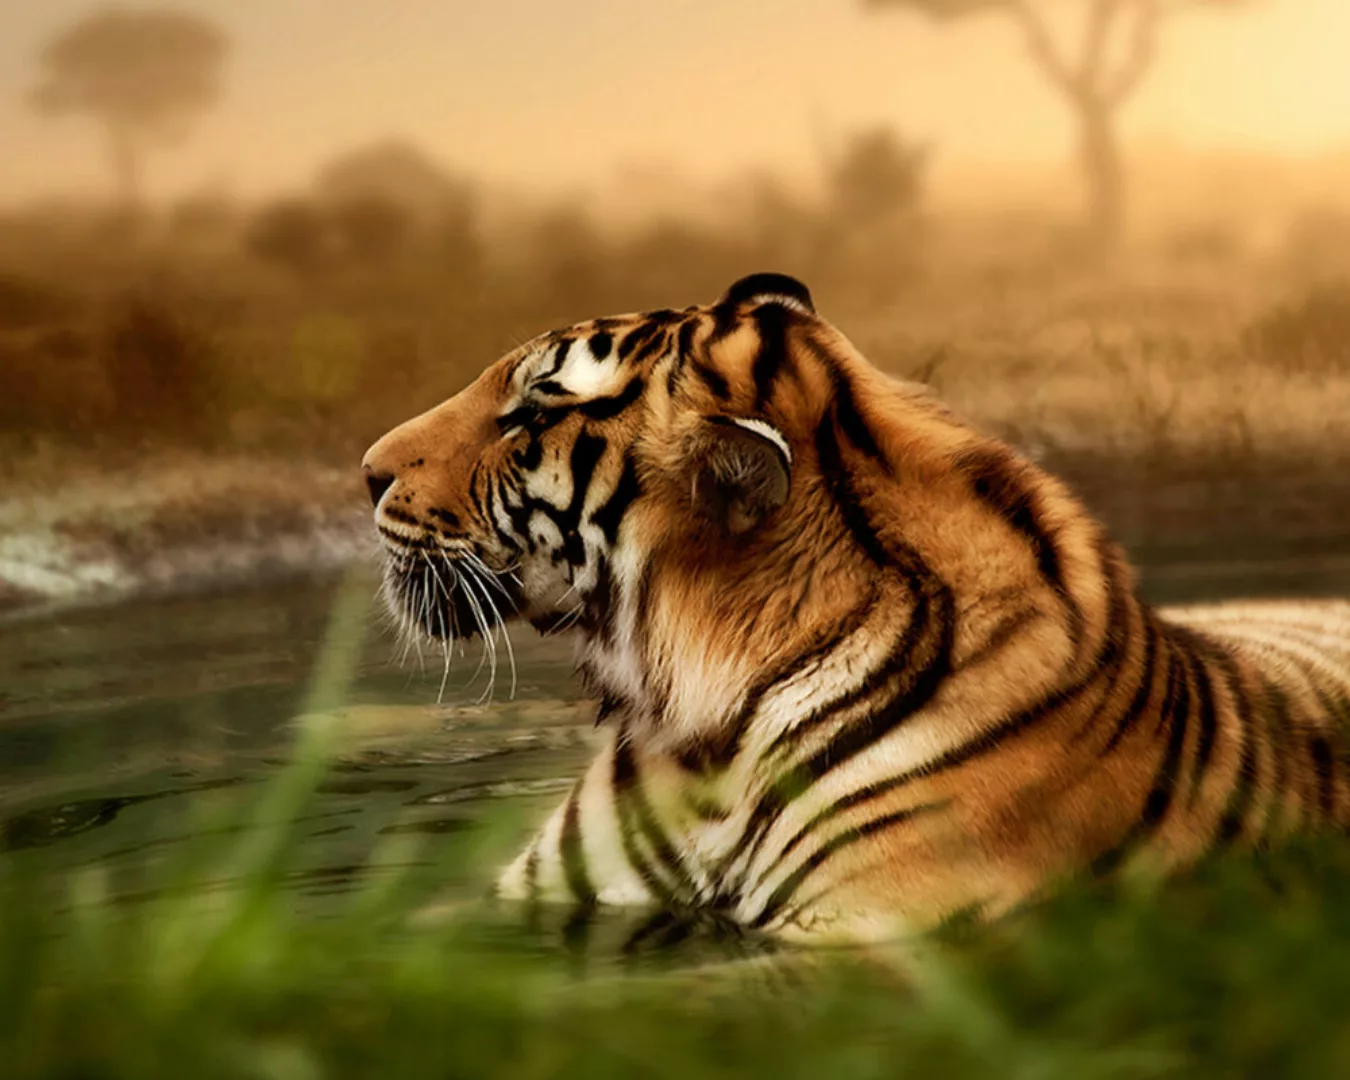 Fototapete "Tiger" 4,00x2,67 m / Glattvlies Perlmutt günstig online kaufen